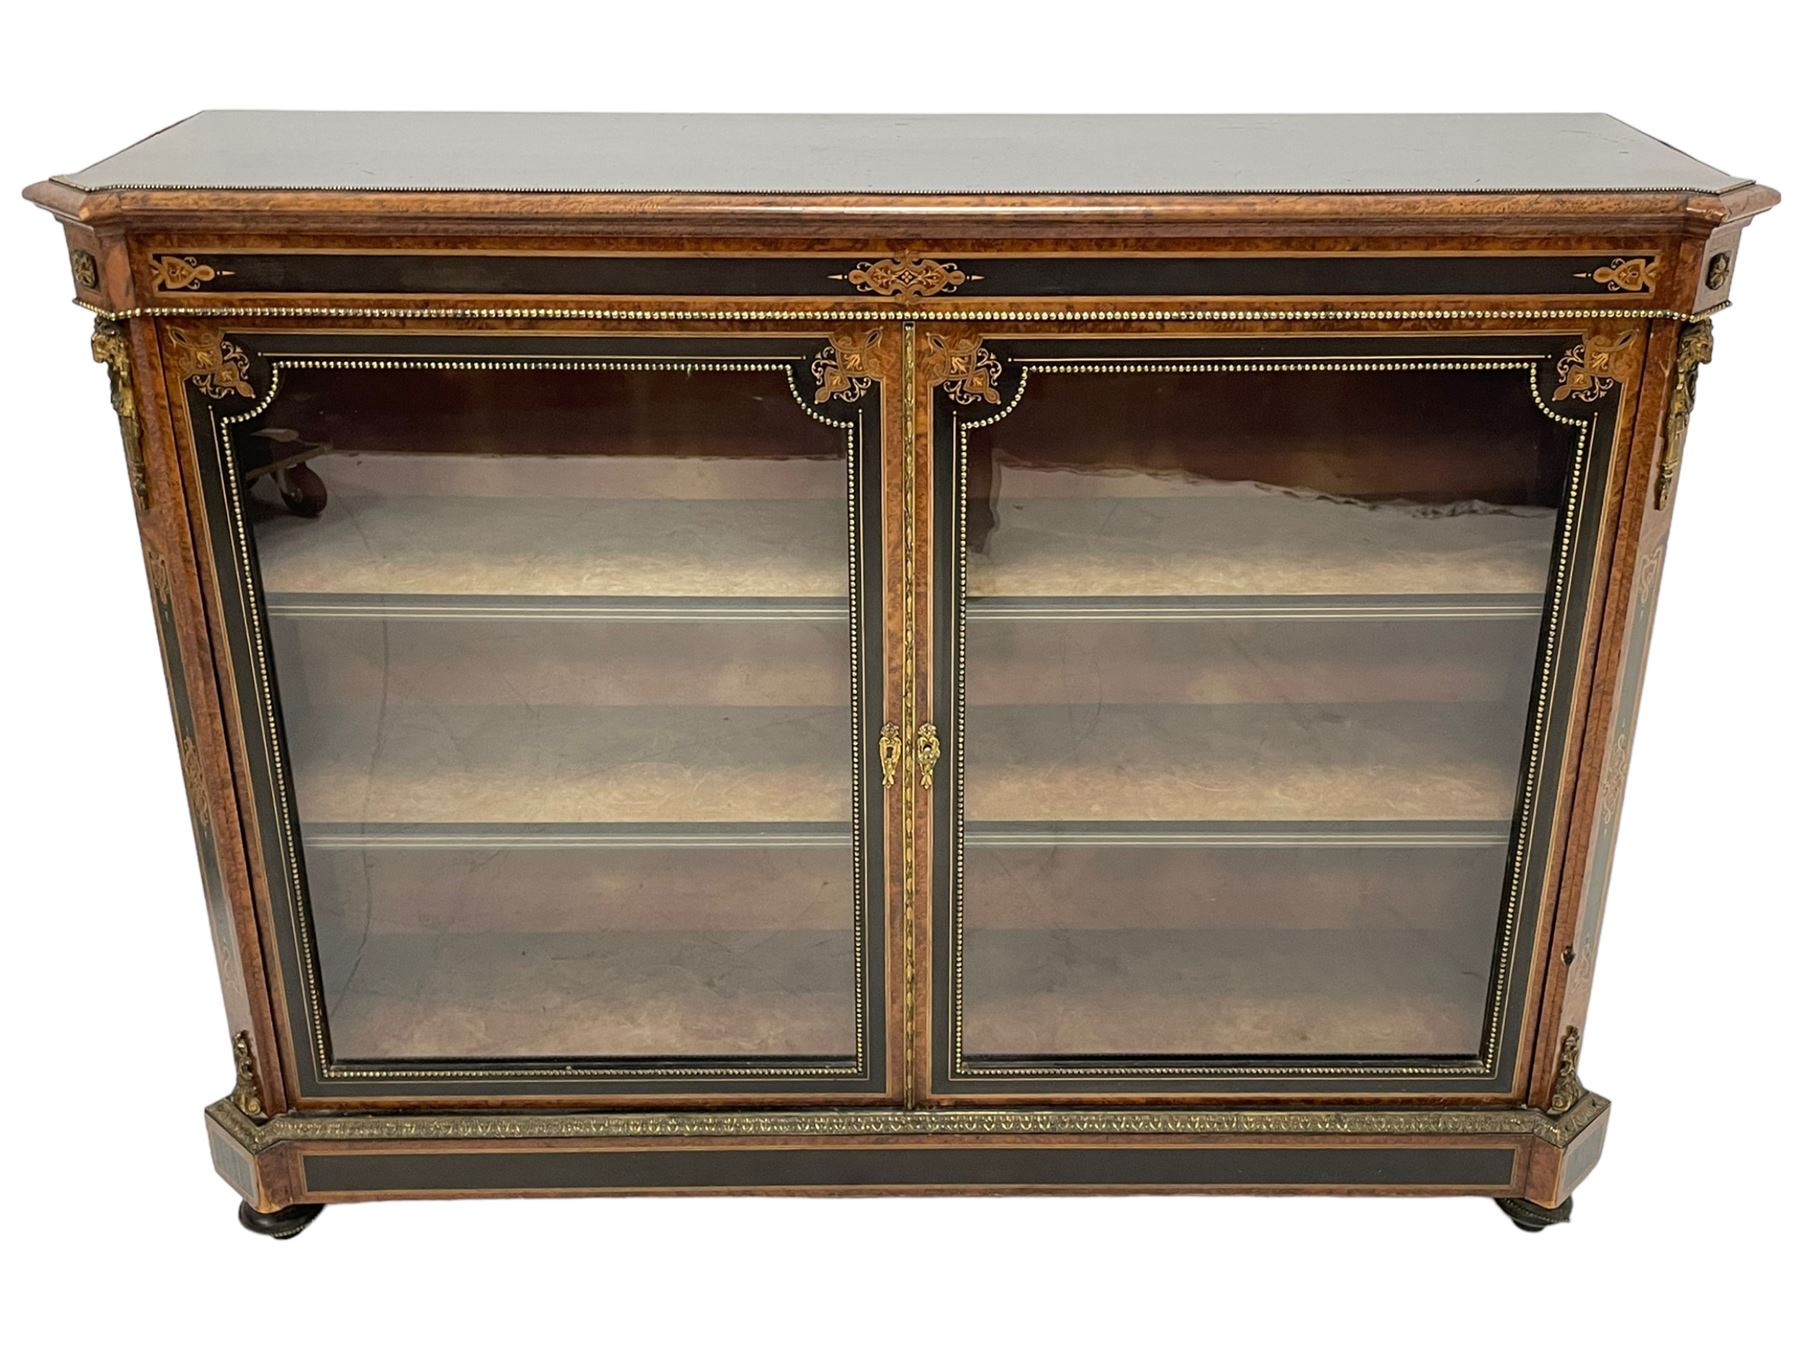 Victorian ebonised and amboyna wood credenza pier cabinet - Image 7 of 26